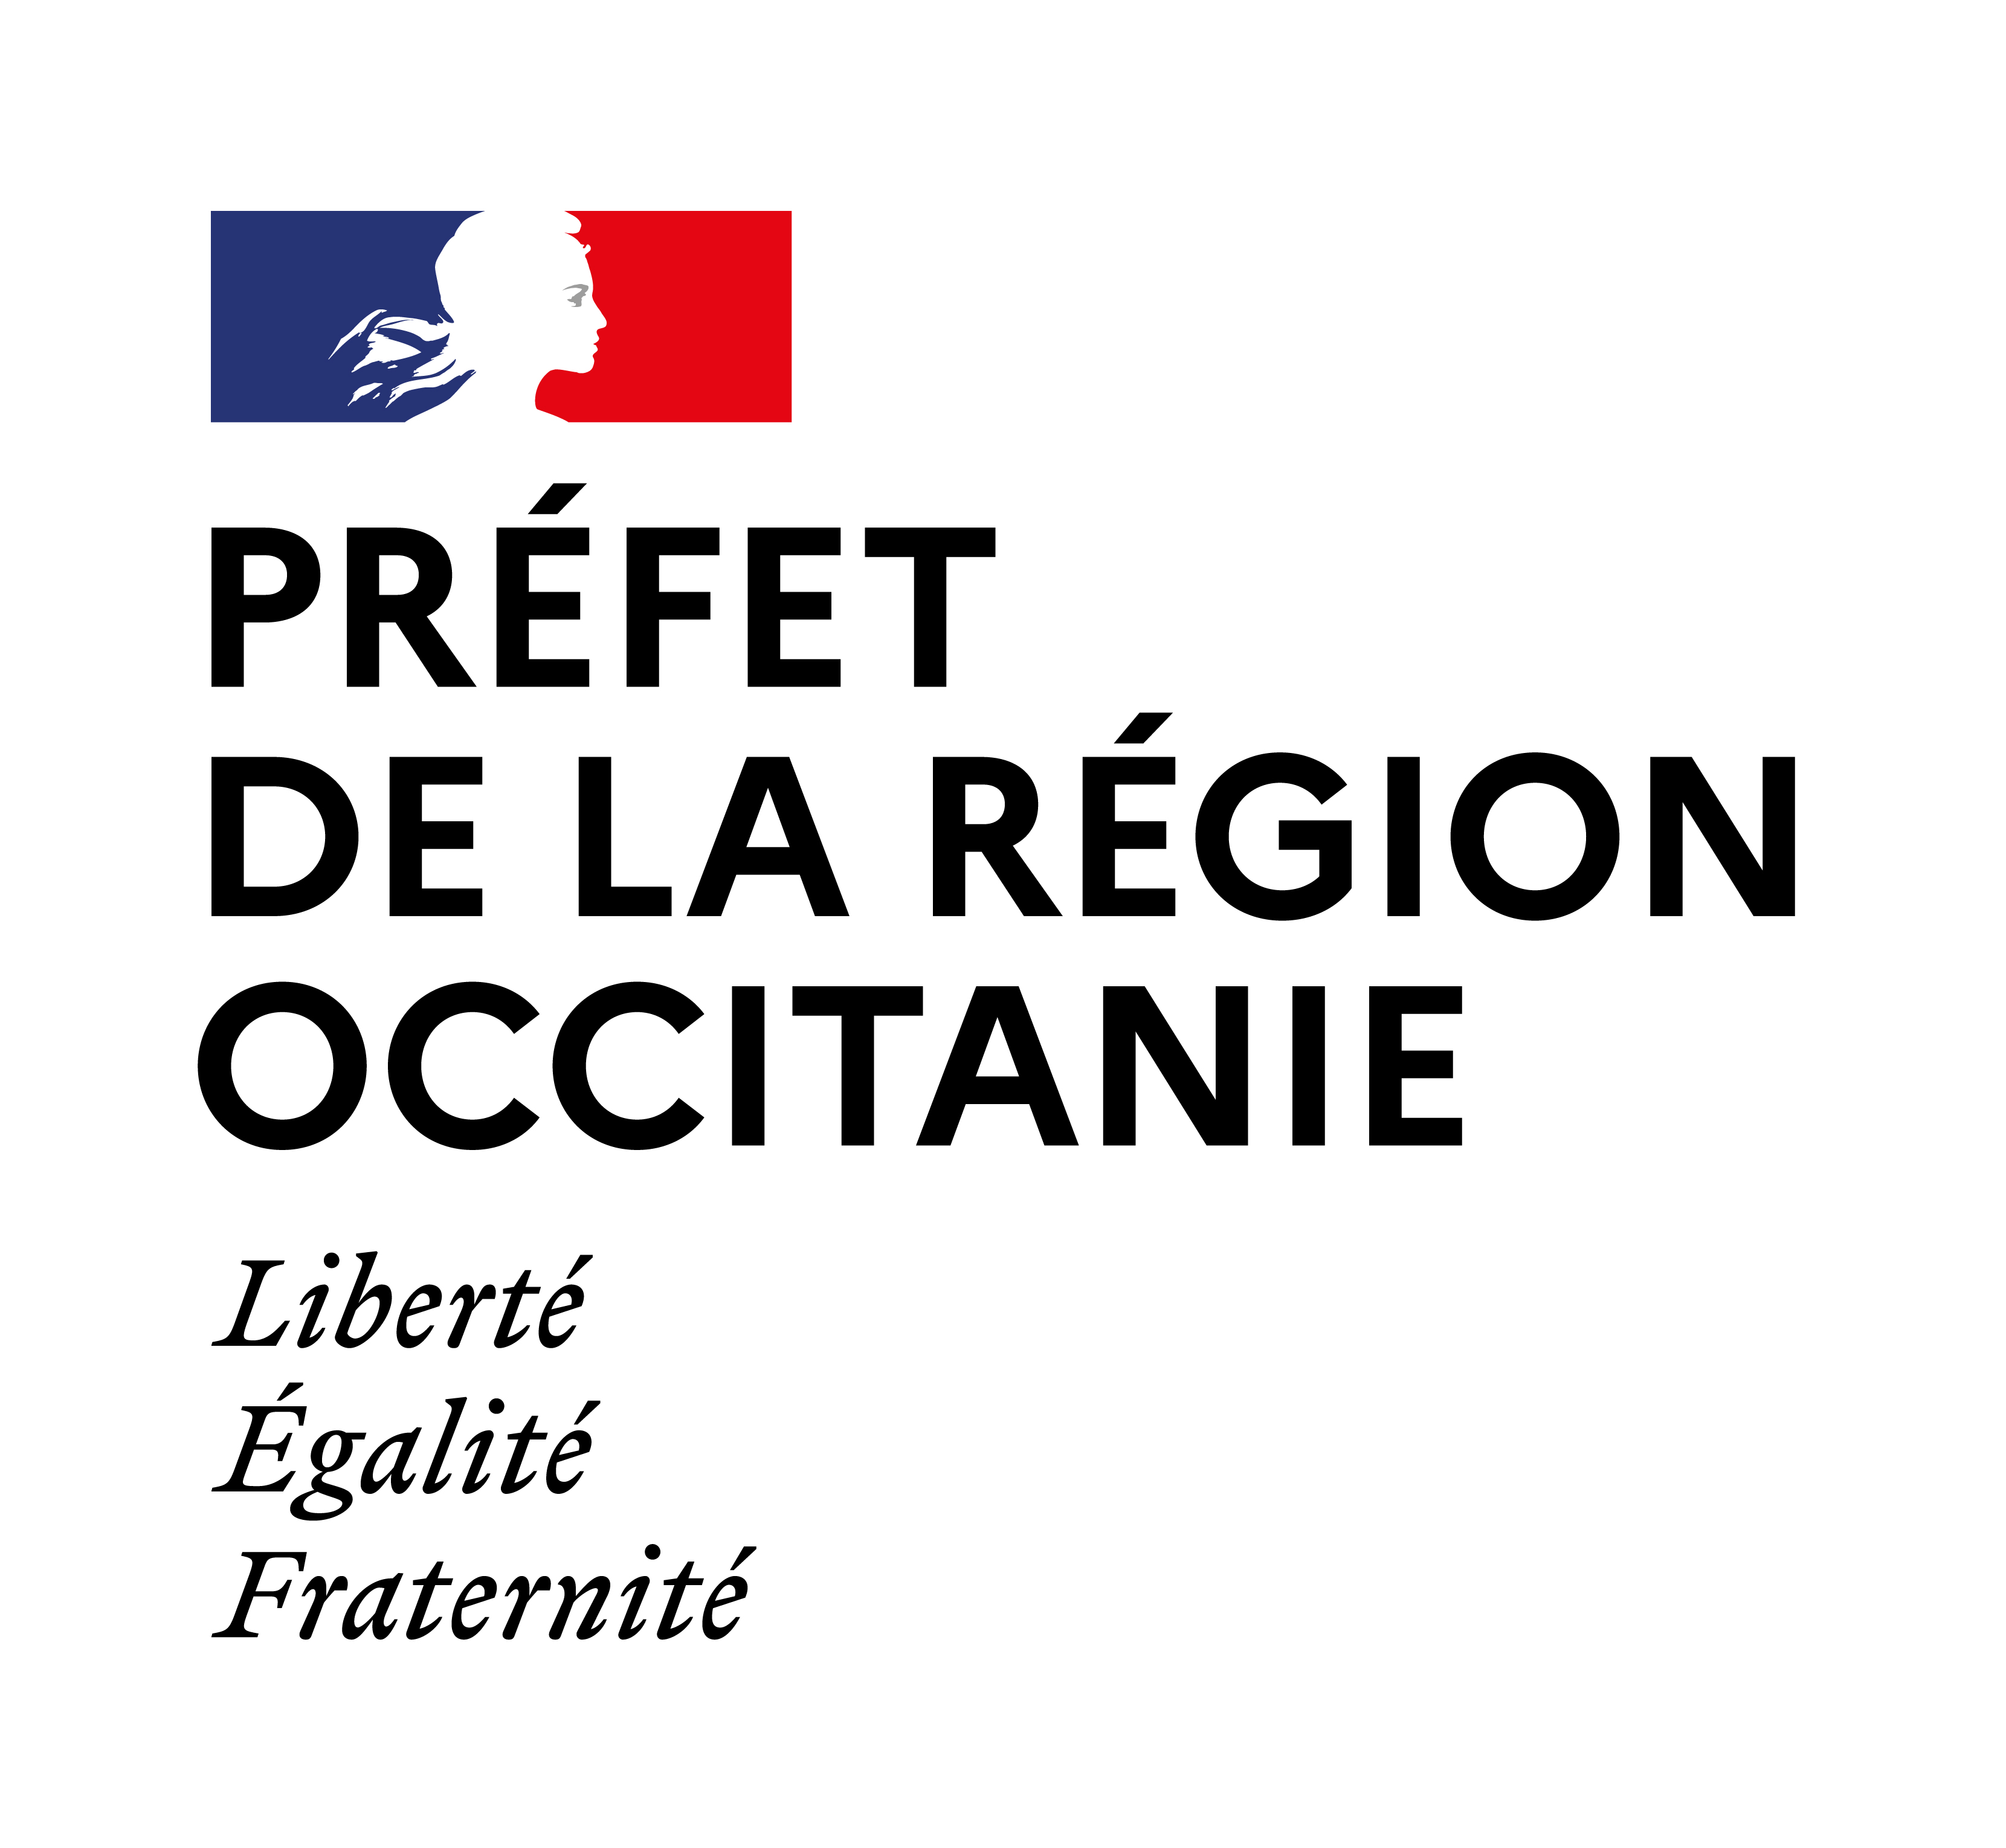 PREF_region_Occitanie_RVB